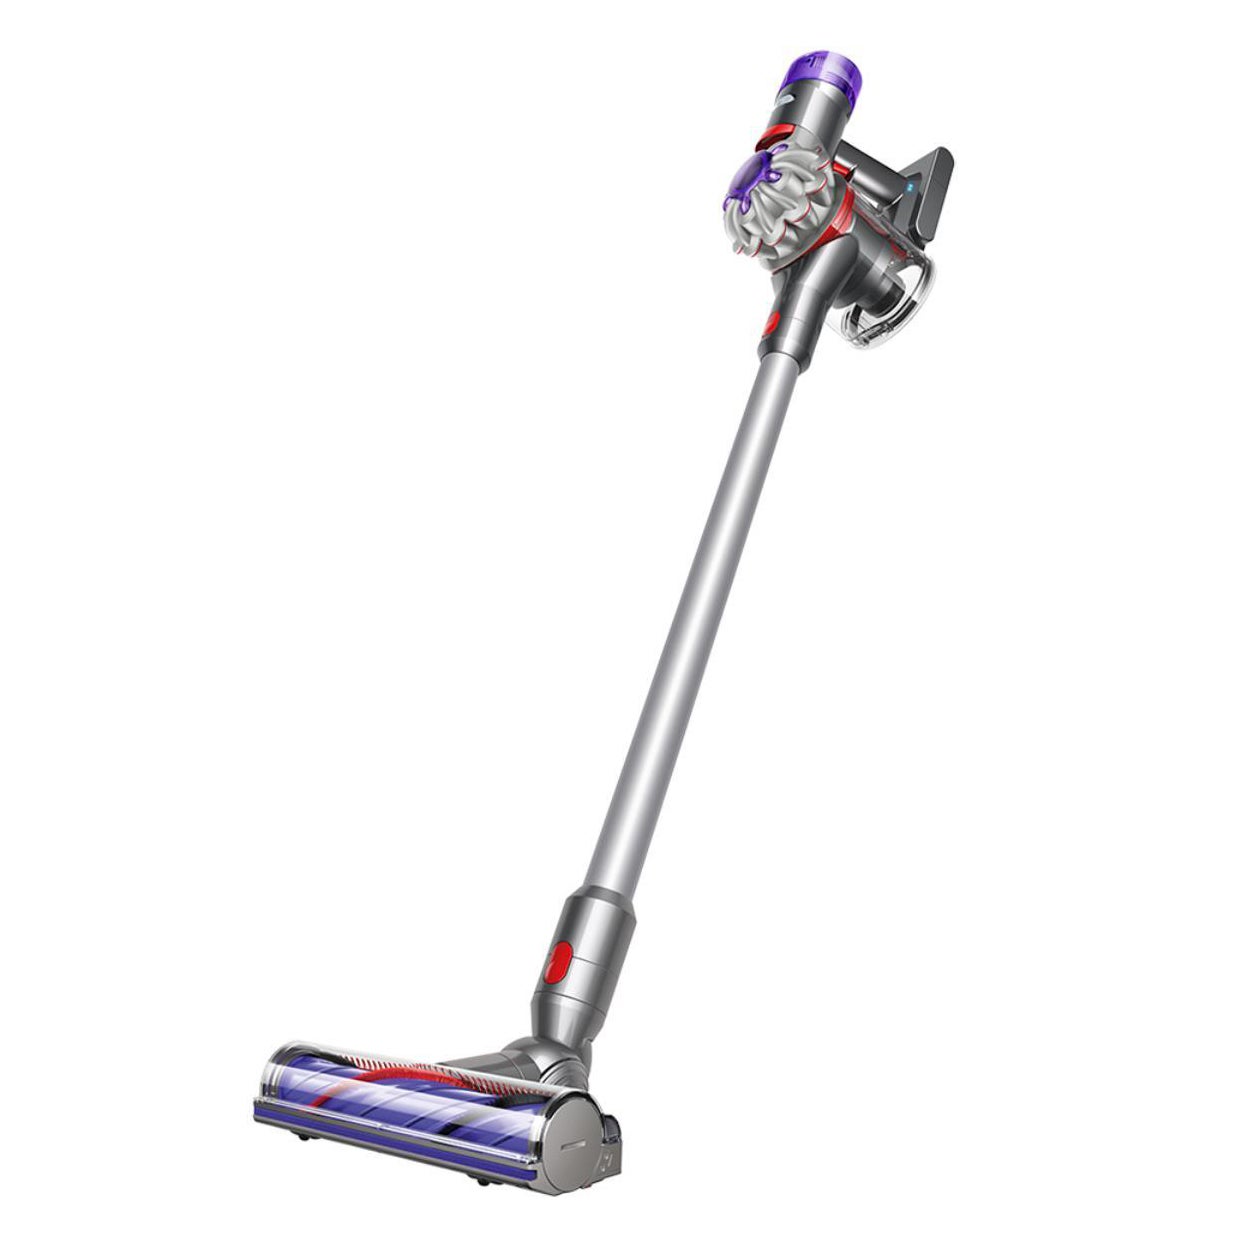 dyson v8 vacuum cleaner